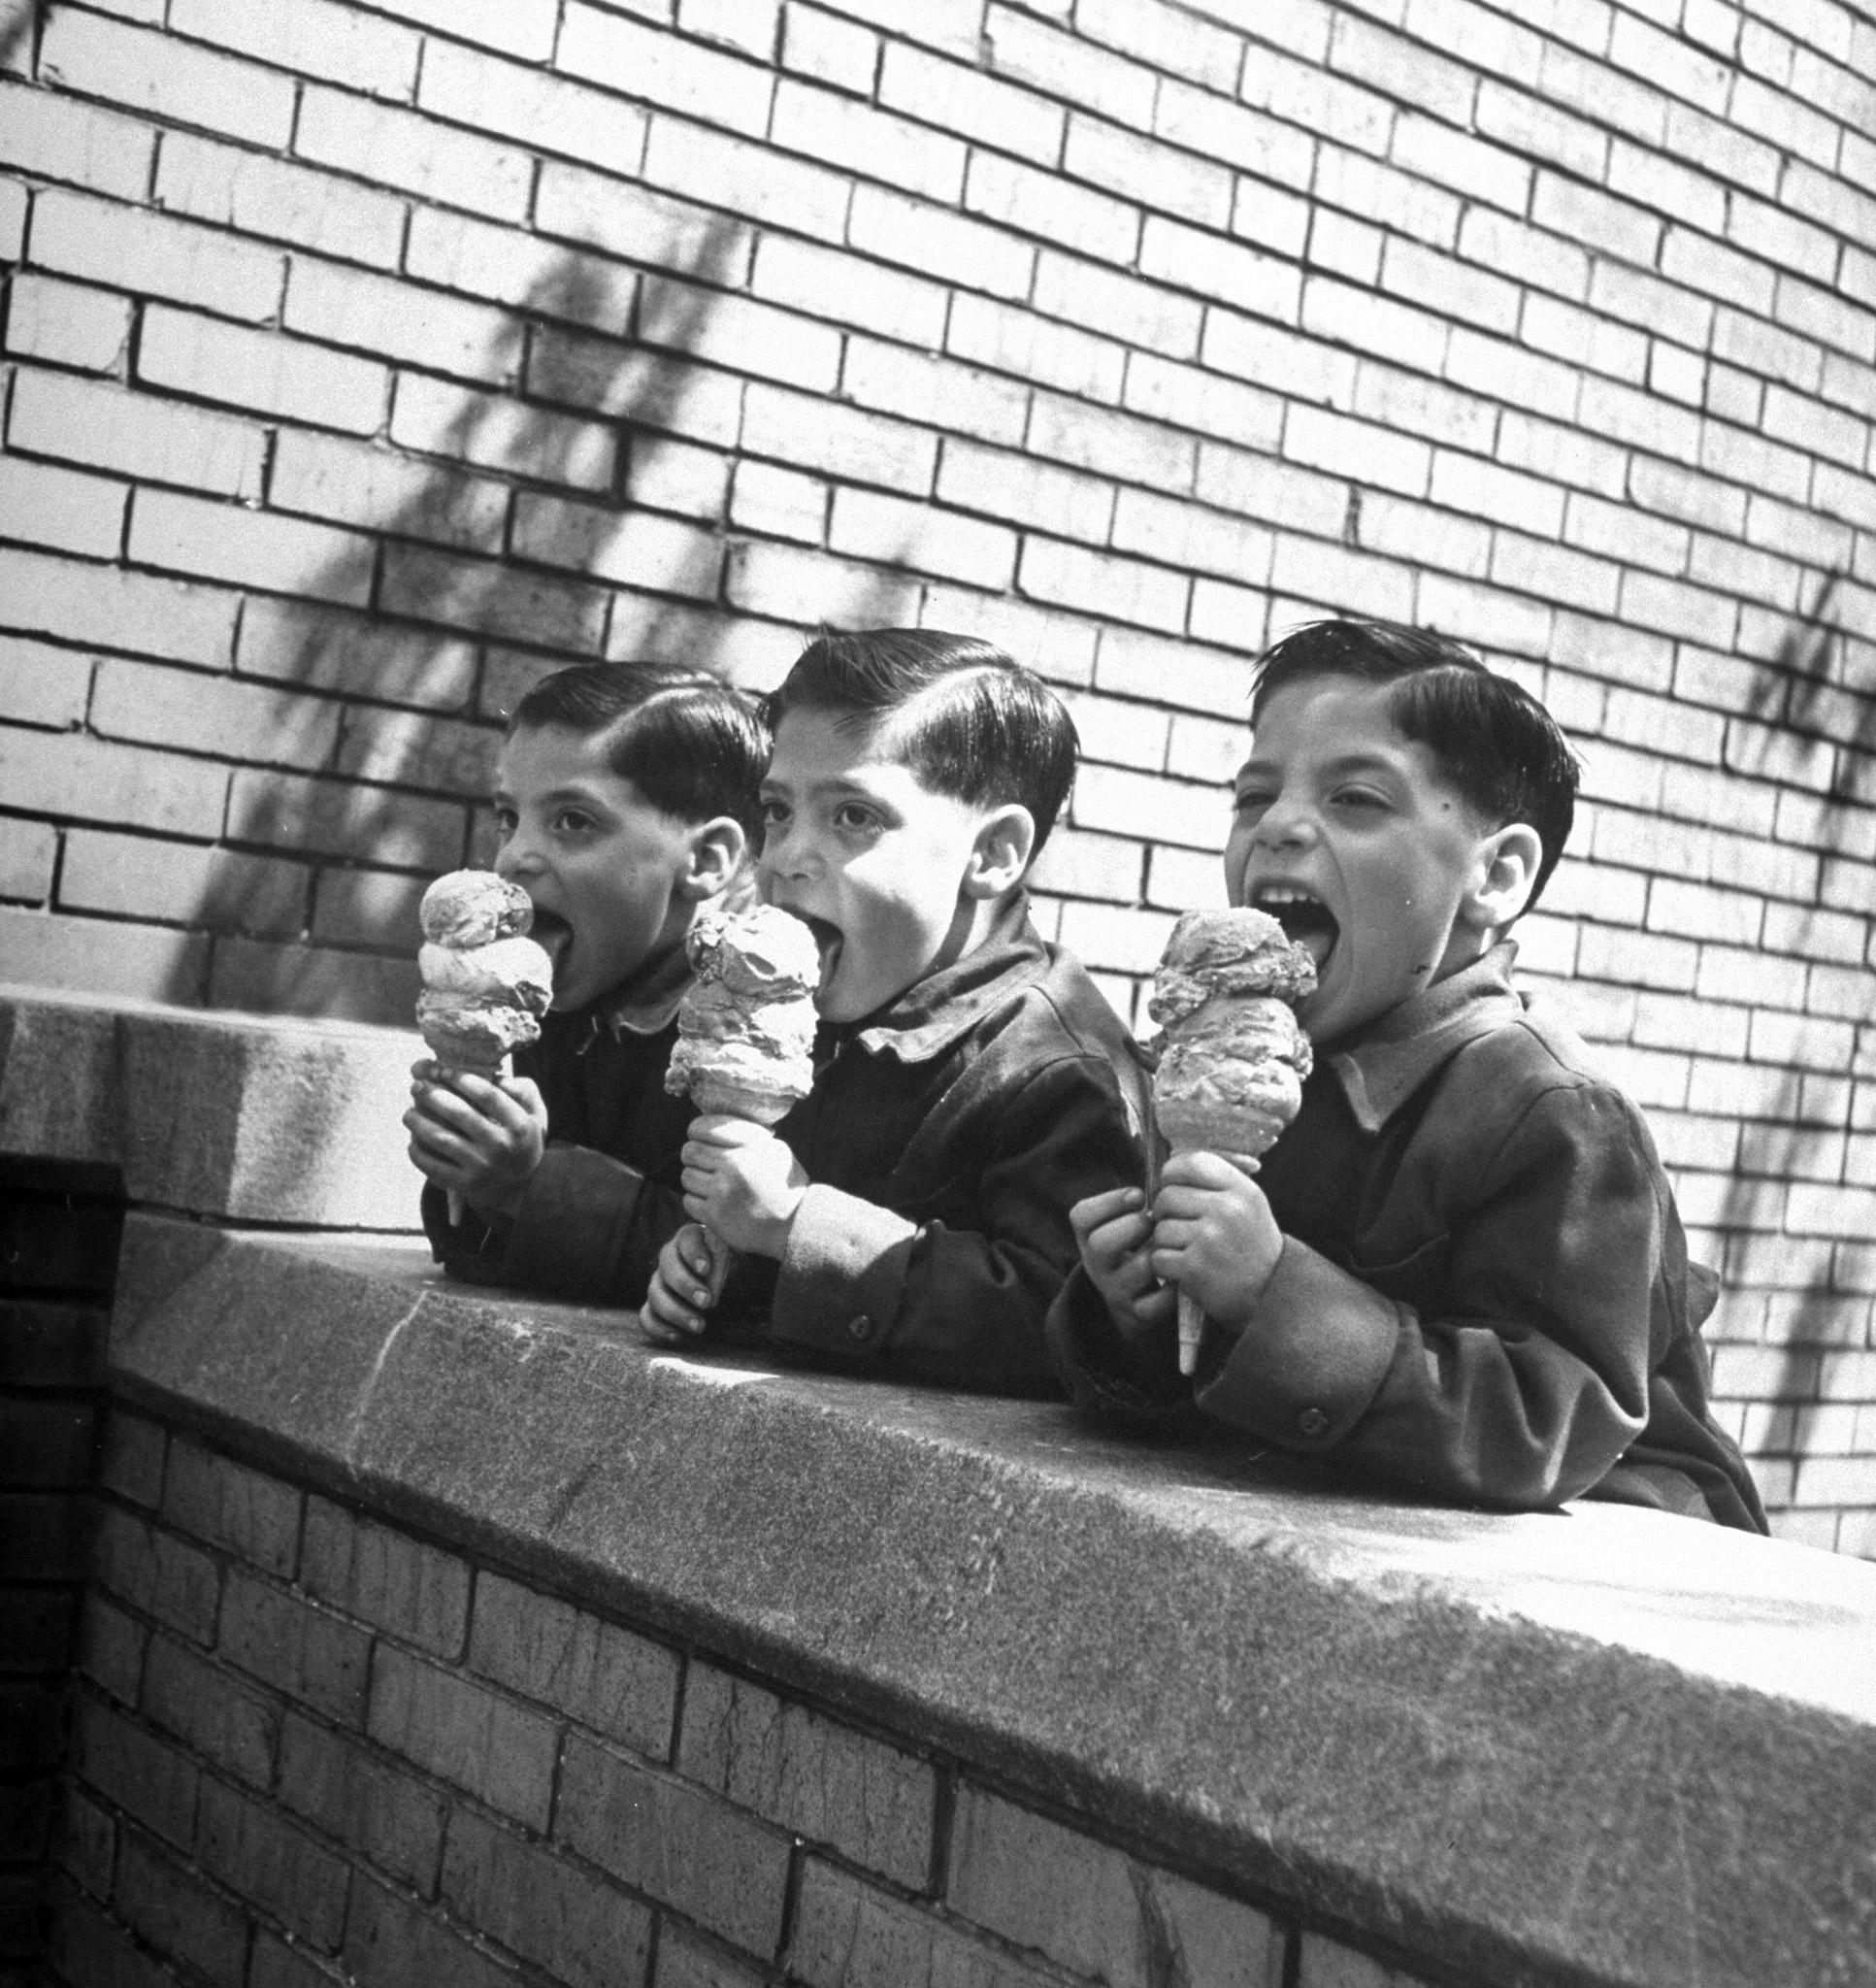 Triplets eating ice cream cones, Robert (L), Sheldon (C) and Ronald (R) Schwartz, 1949.